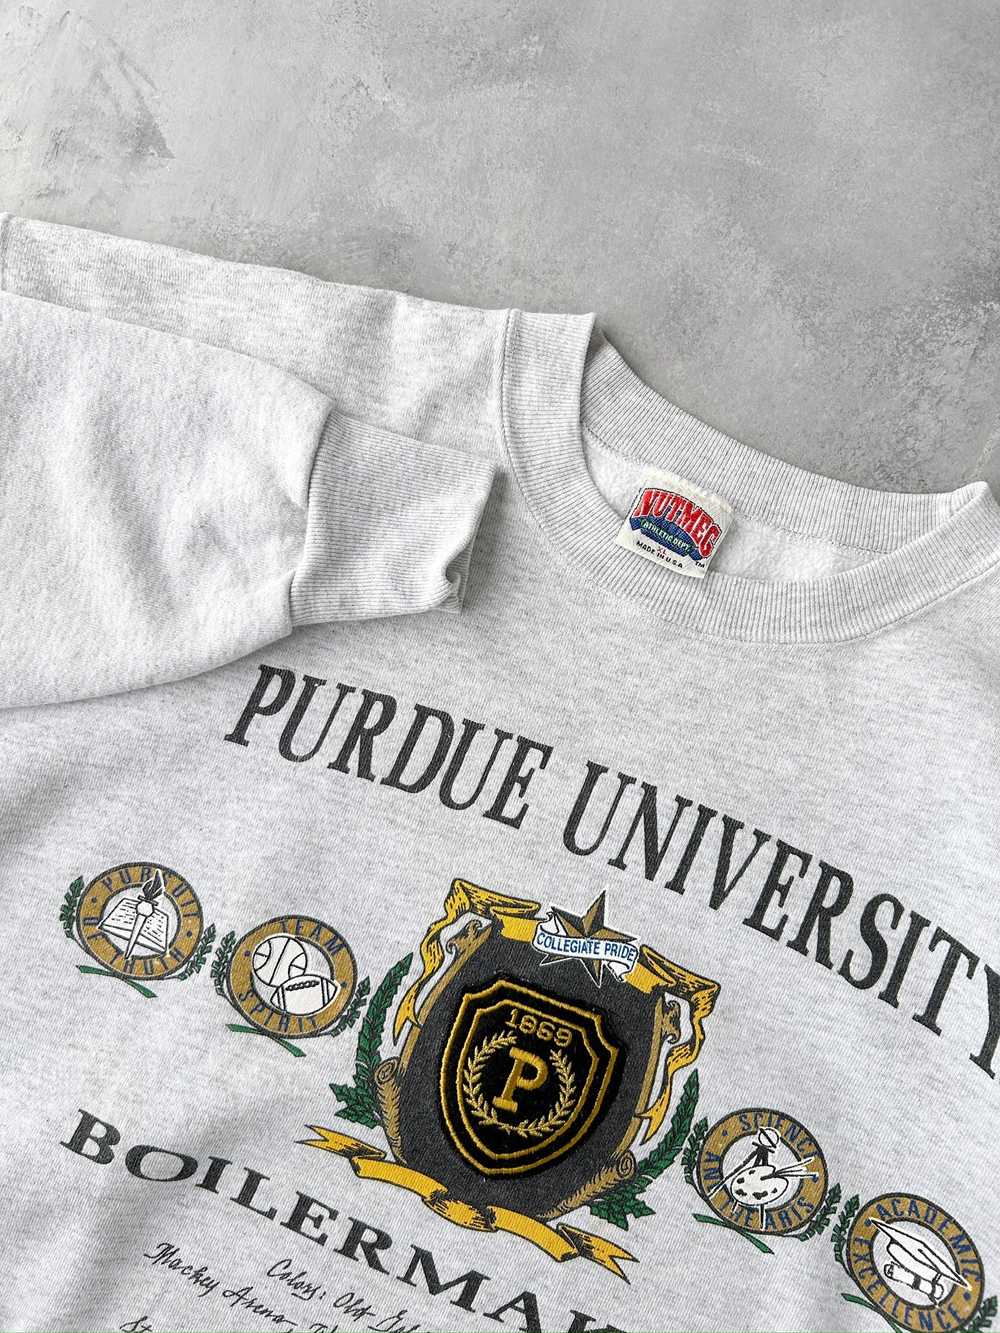 Purdue University Sweatshirt 90's - XL - image 2